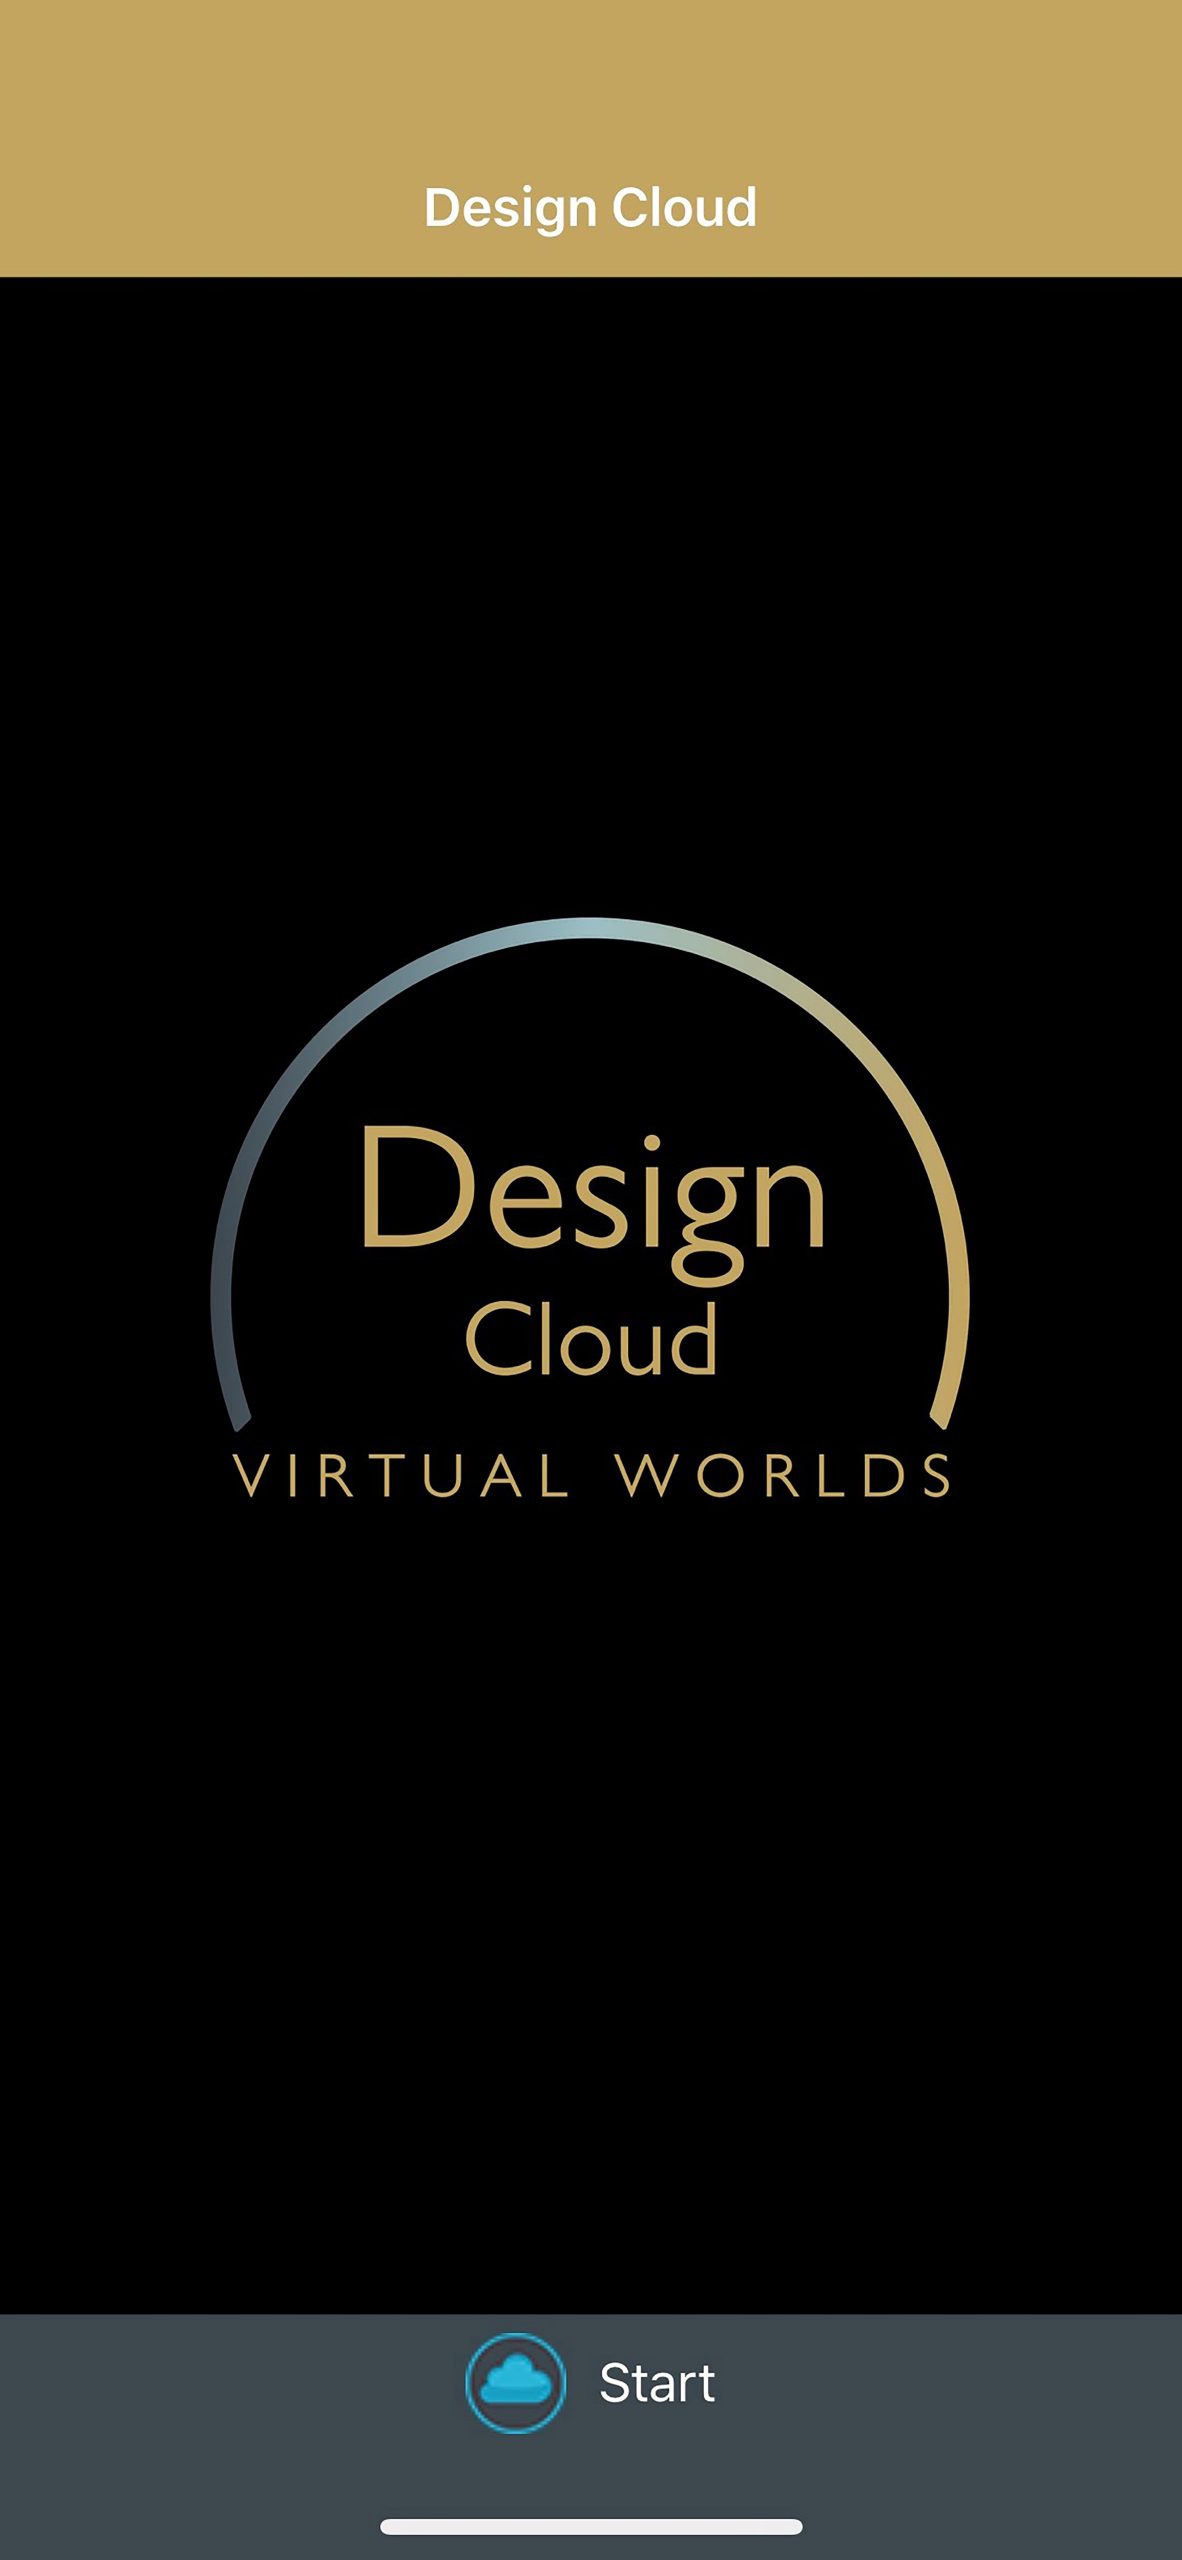 Design Cloud free remote software